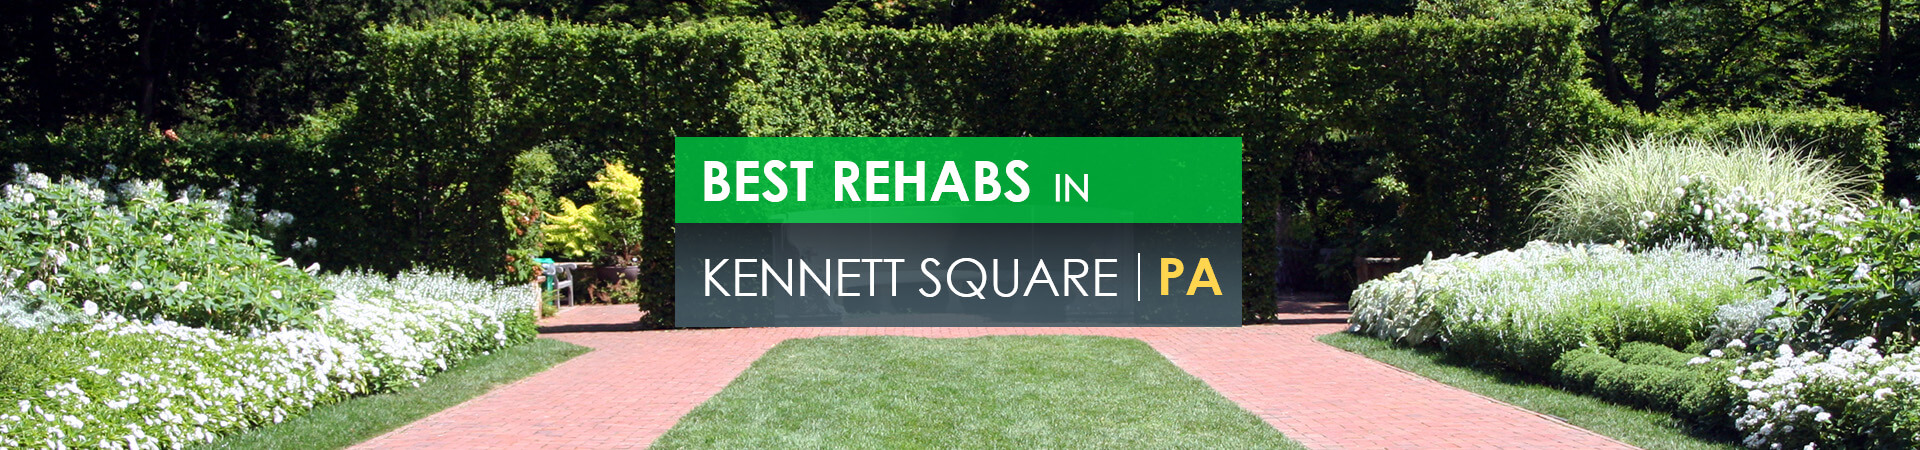 Best rehabs in Kennett Square, PA